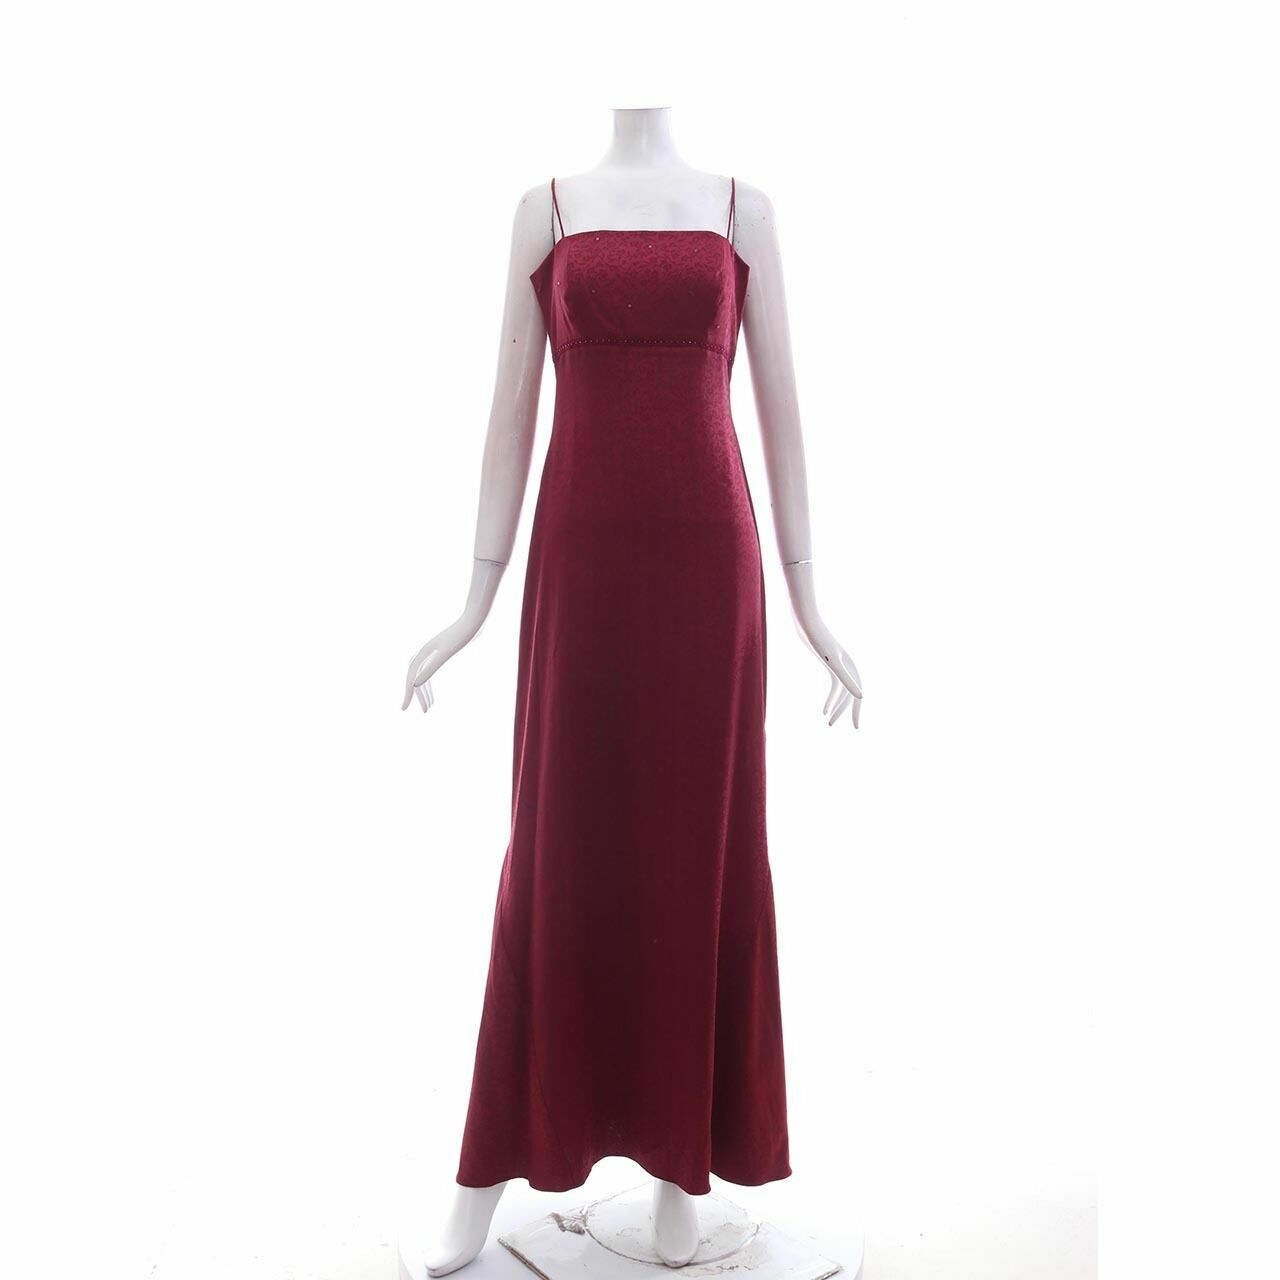 VOTUM By Sebastian & Cristina Maroon Long Dress